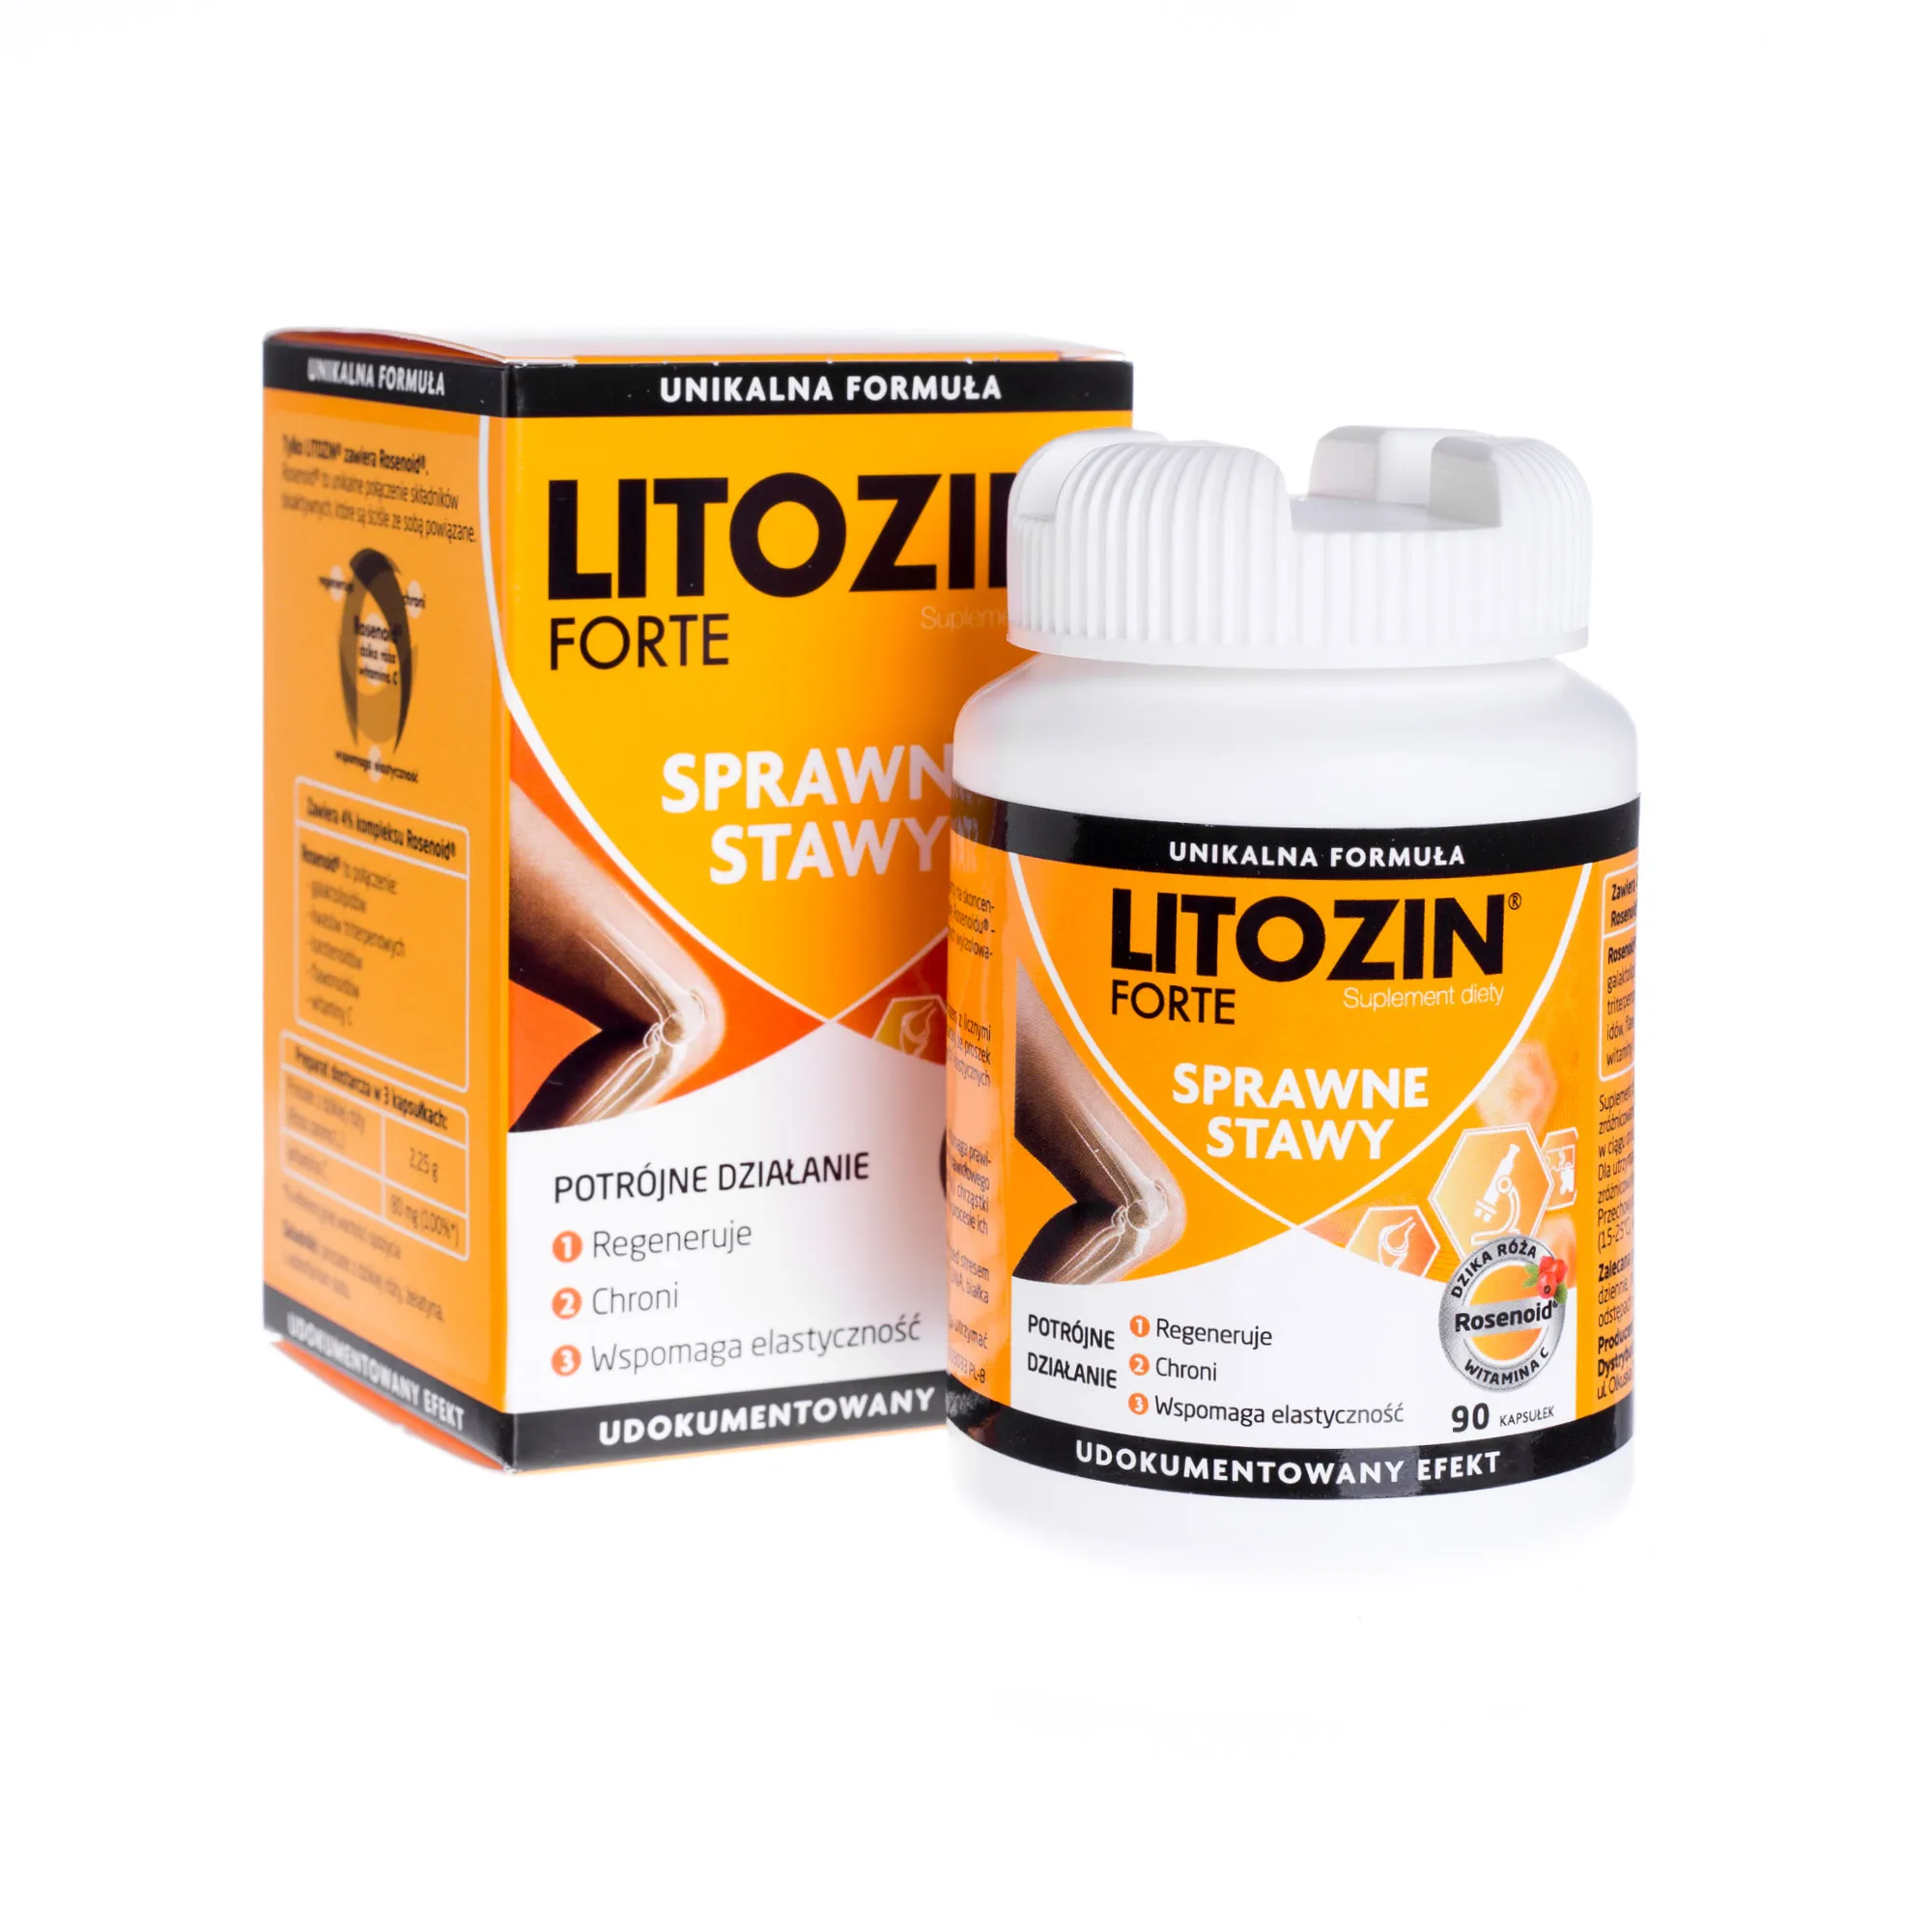 Litozin Forte, suplement diety, sprawne stawy, 90 kapsułek